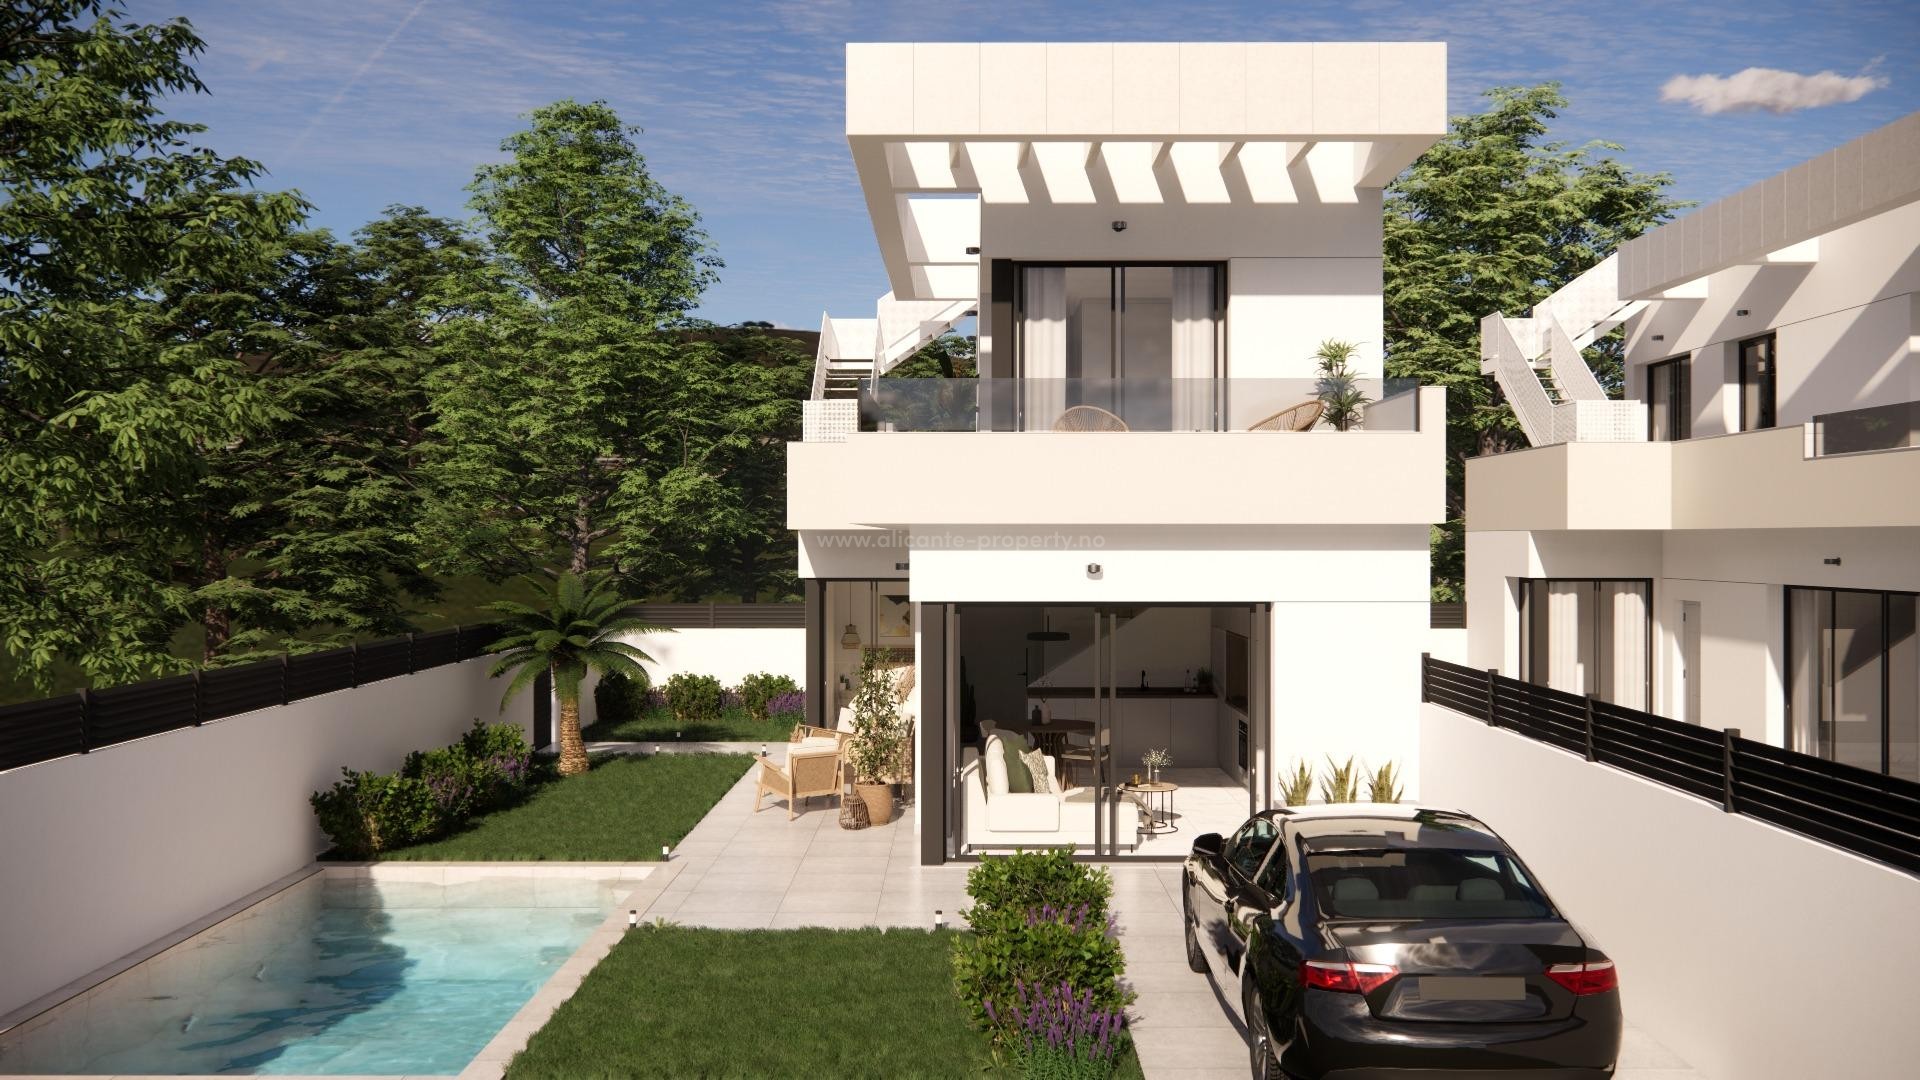 Semi-detached house in Los Montesinos (La Herrada), 3 bedrooms, 2 bathrooms, terrace, garden, possibility of pool. 10 minutes from beaches